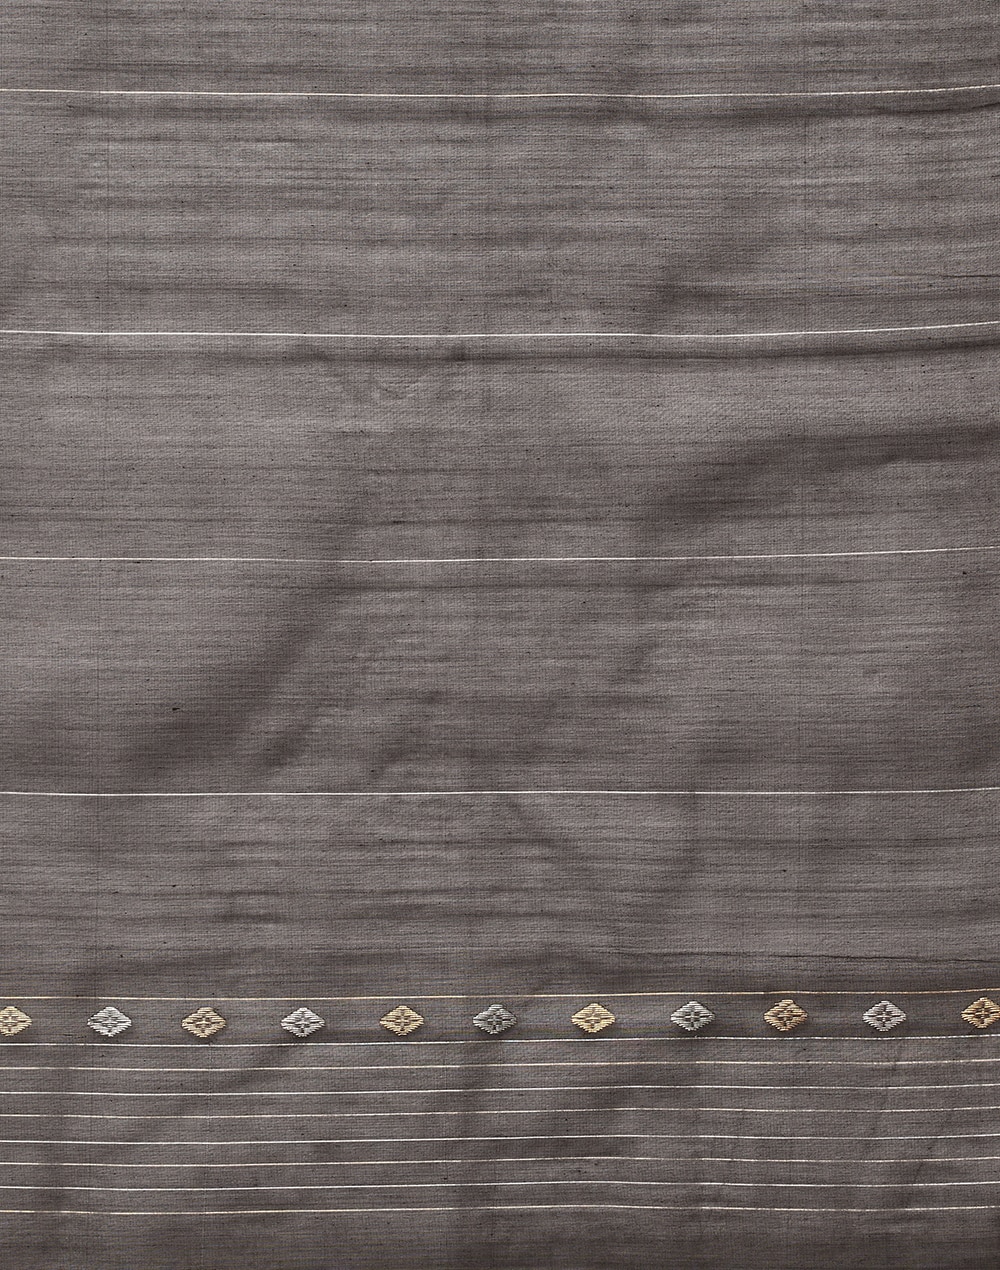 Cotton Silk Woven Chanderi Dupatta